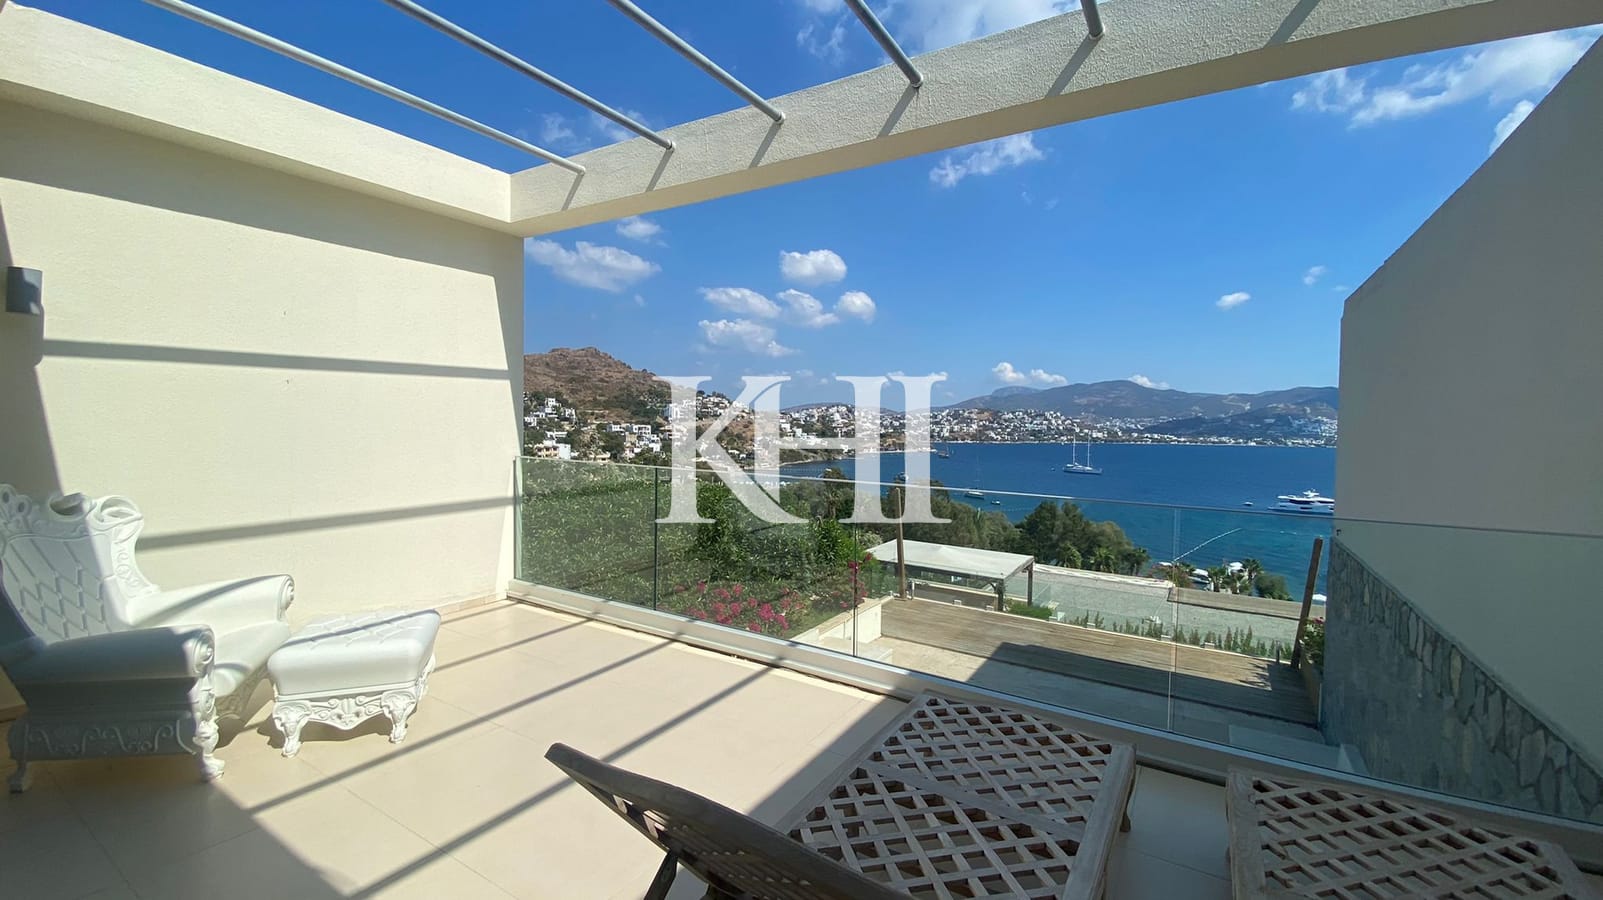 Luxury Sea-View Yalikavak House For Sale Slide Image 16